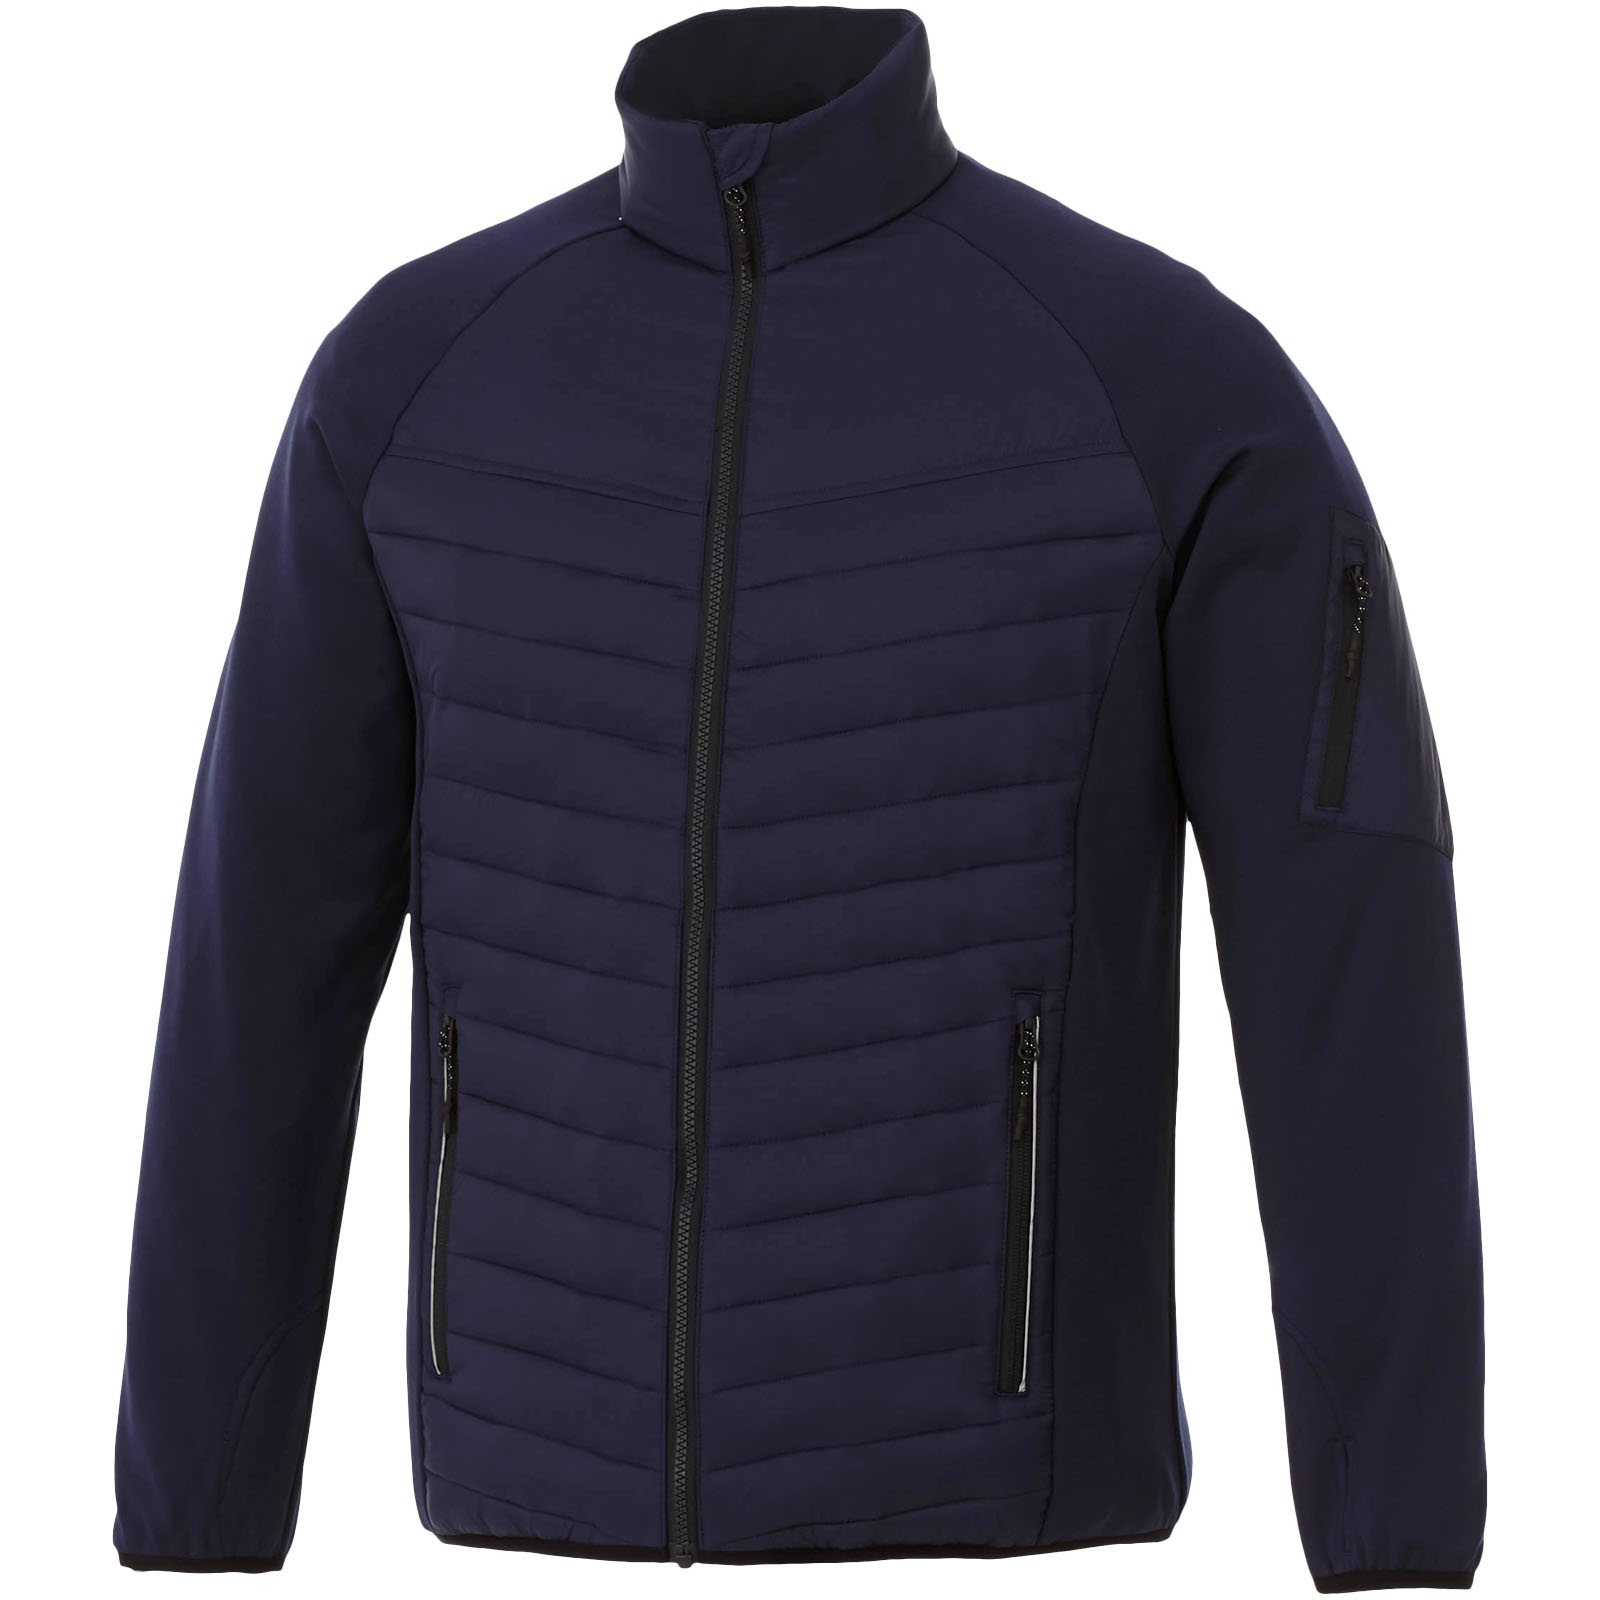 Advertising Jackets - Banff men's hybrid insulated jacket